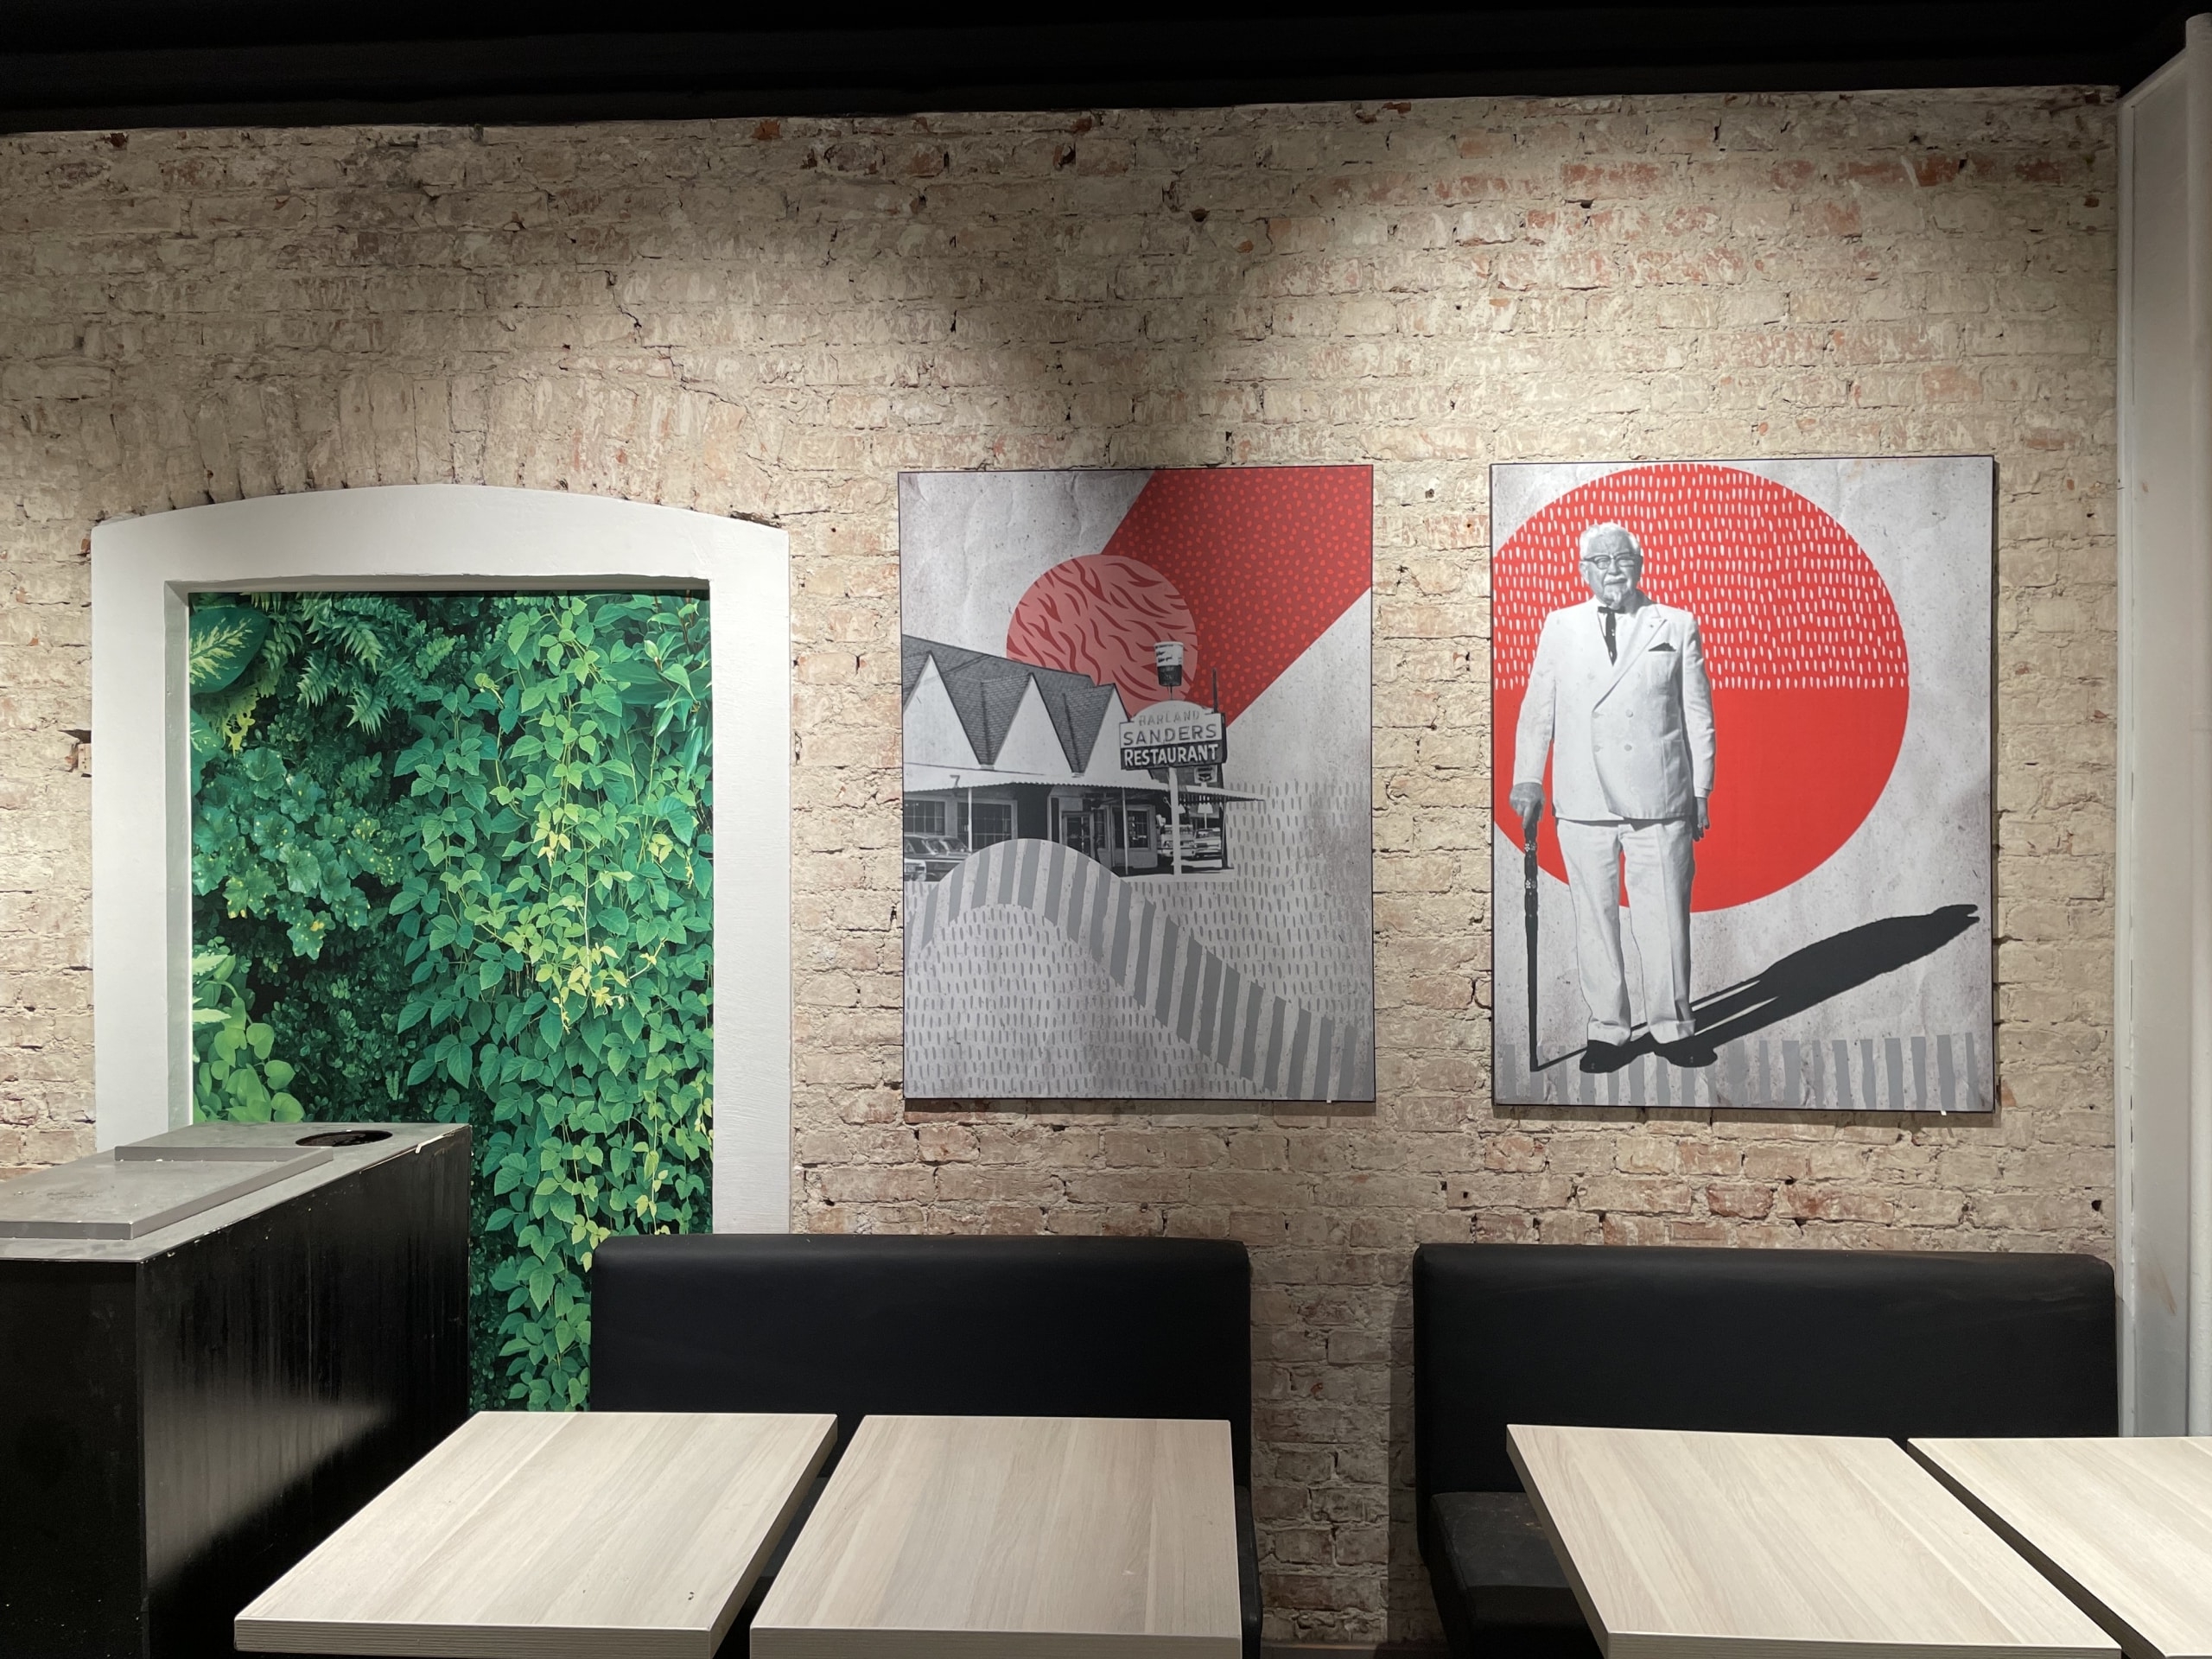 KFC renoverar sina restauranger